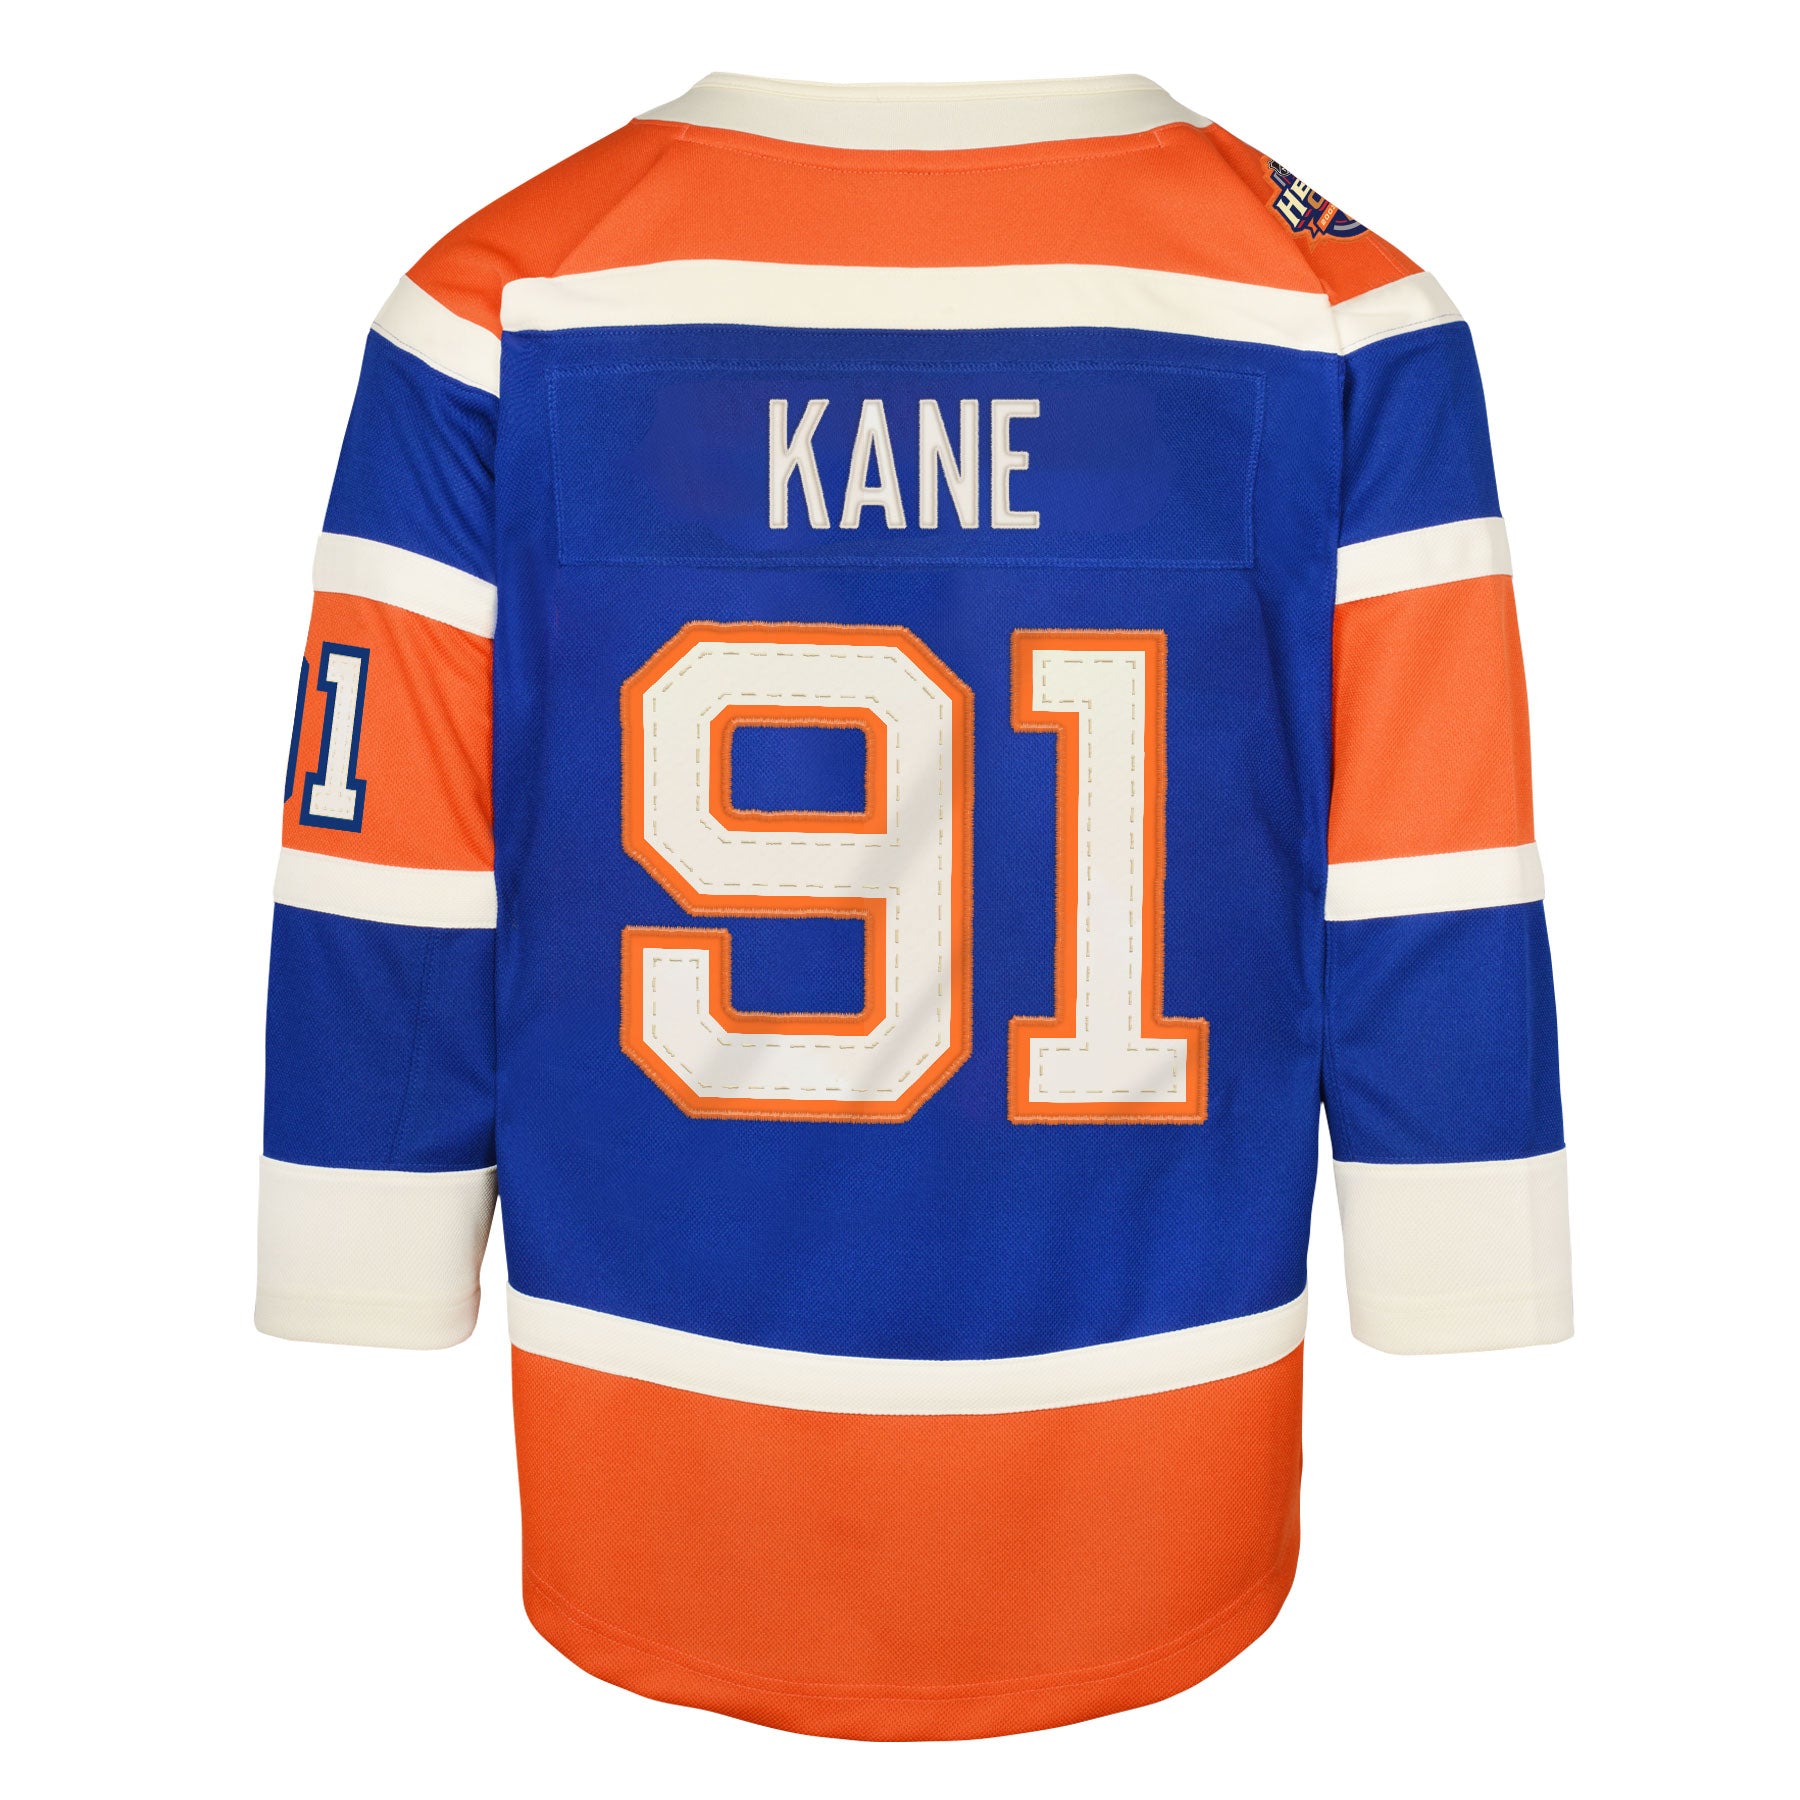 Youth Evander Kane Edmonton Oilers Fanatics Branded Alternate 2018